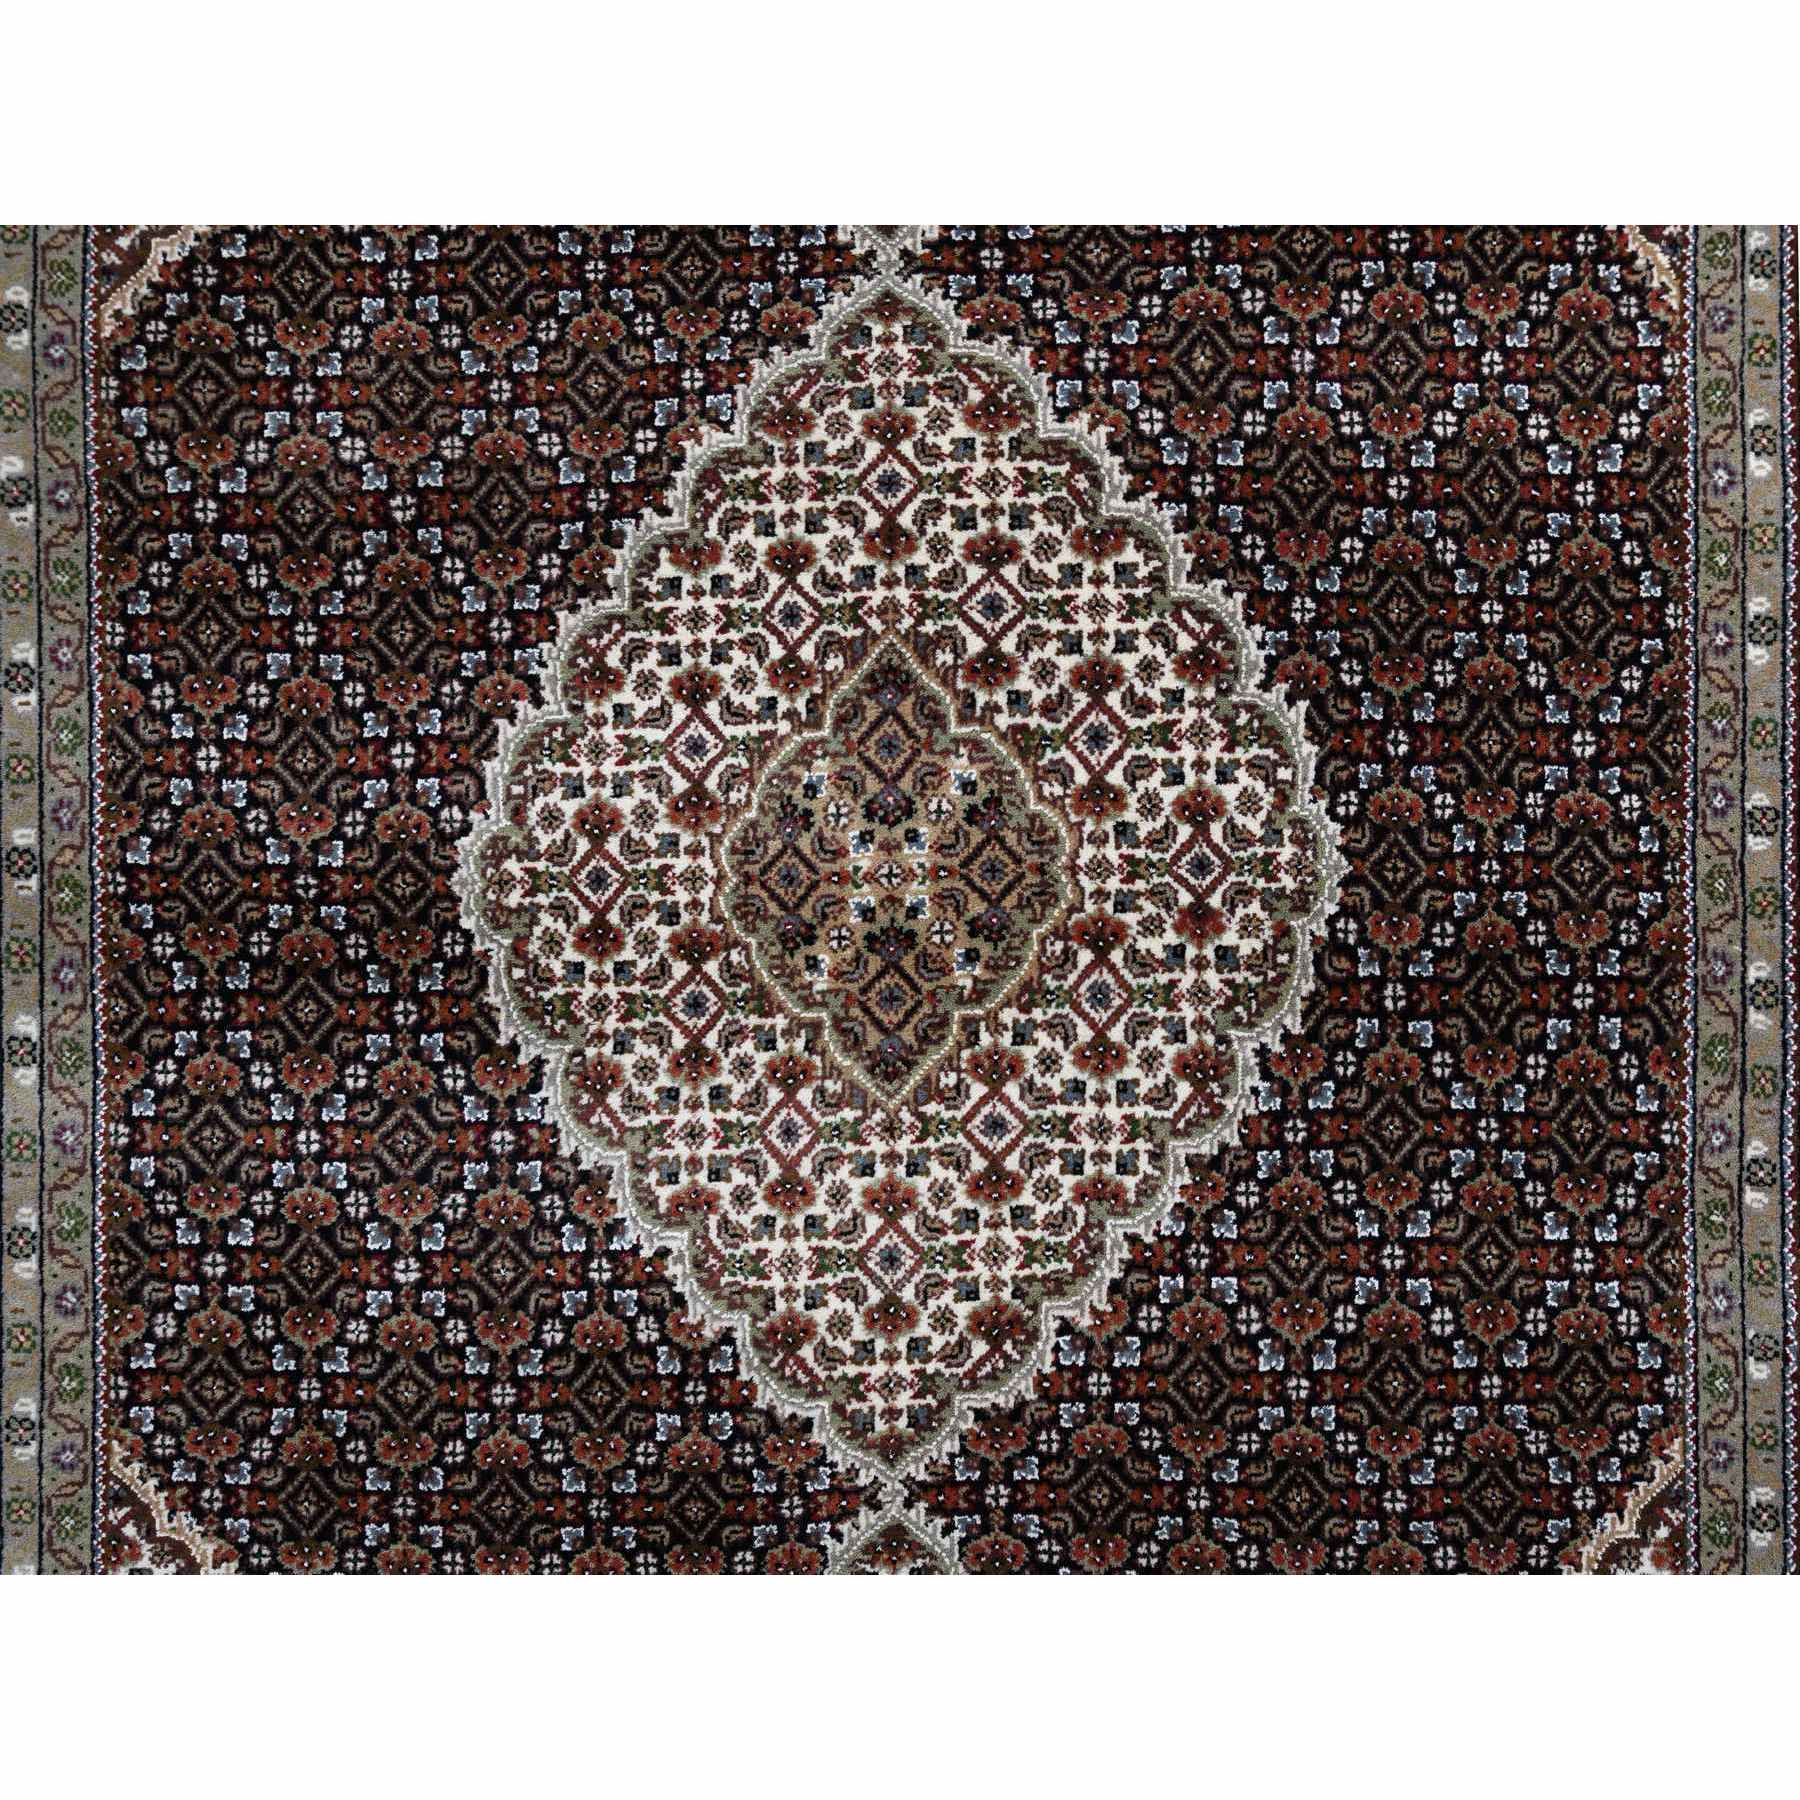 6'x8'8" Hand Woven Rich Black Tabriz Mahi with Fish Medallion Design Wool and Silk 175 KPSI Oriental Rug 